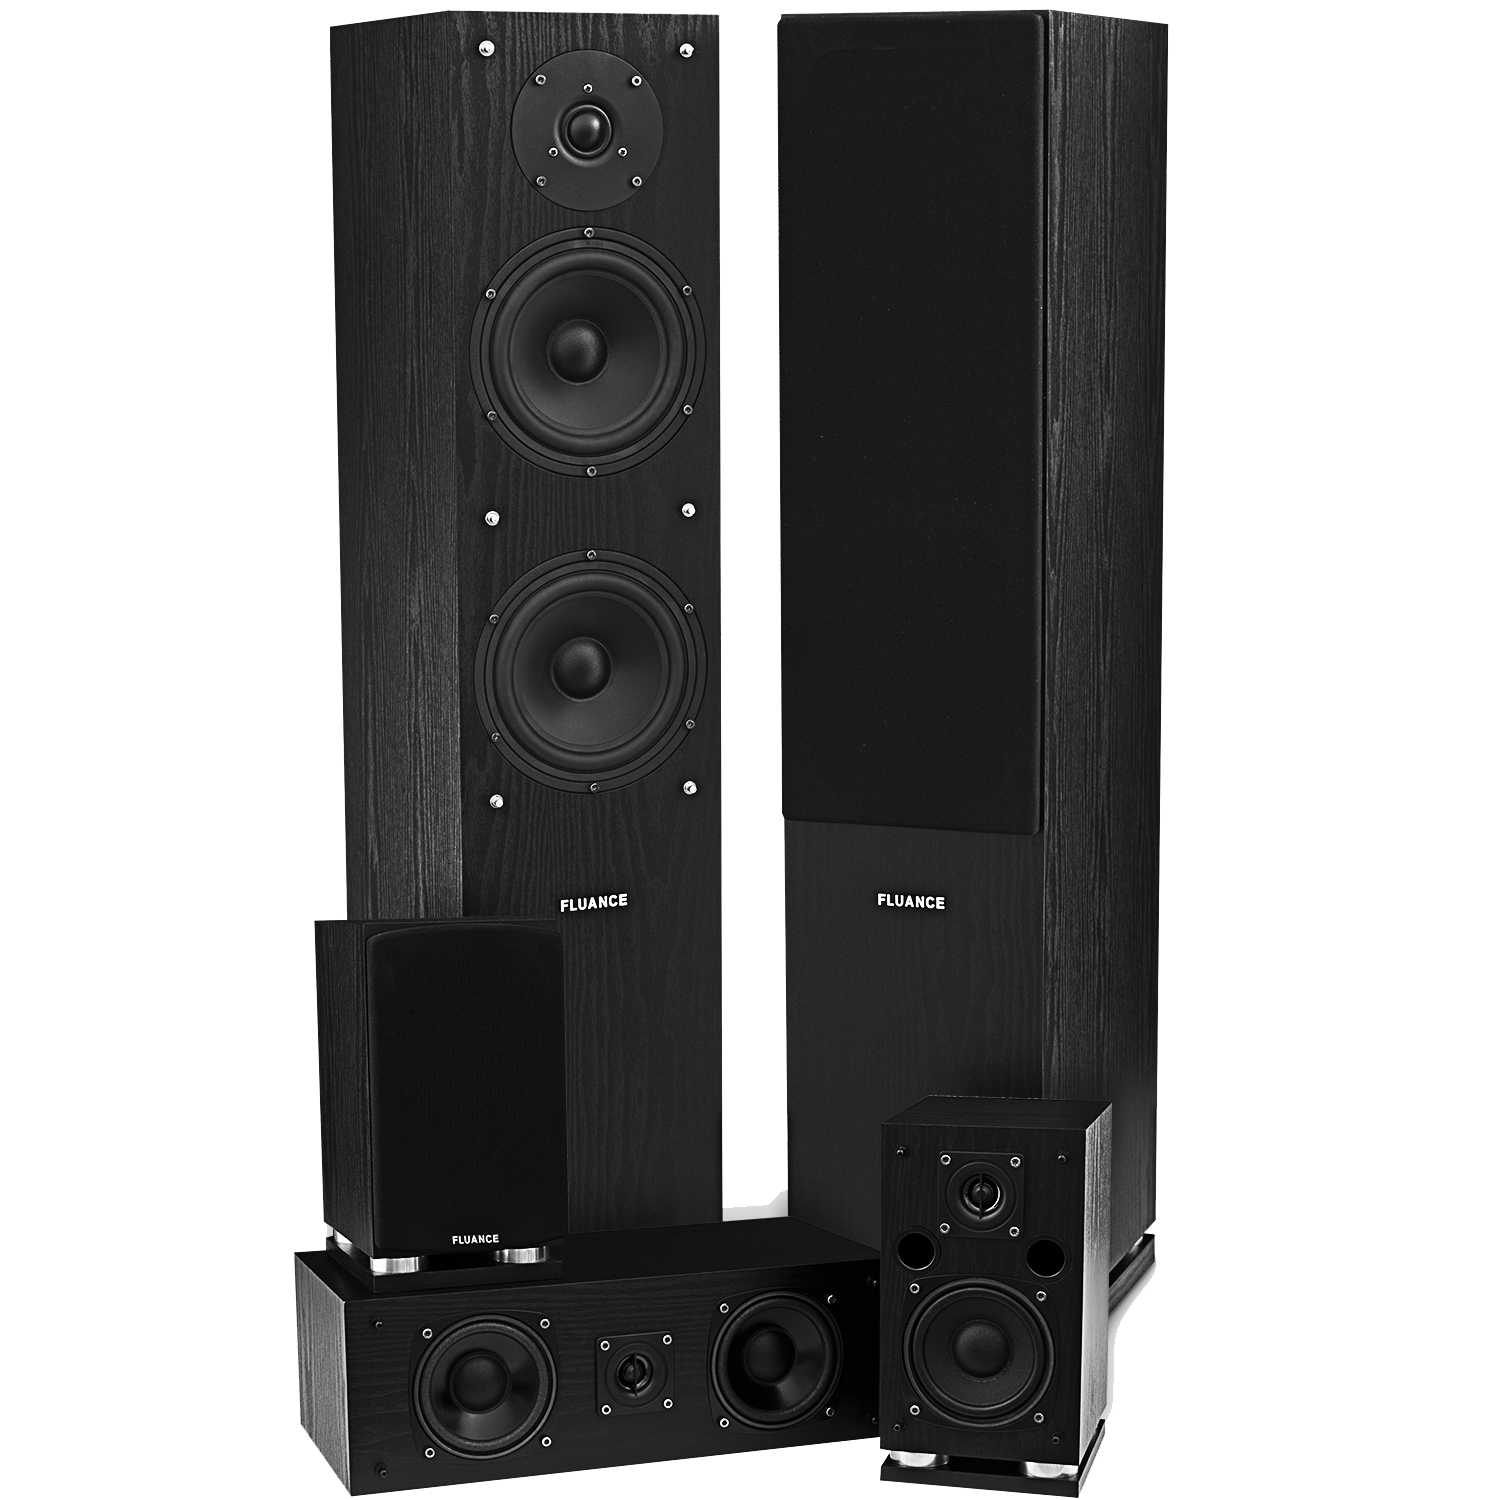 SXHTB Surround Sound Home Theater Speaker System | Shoptronics